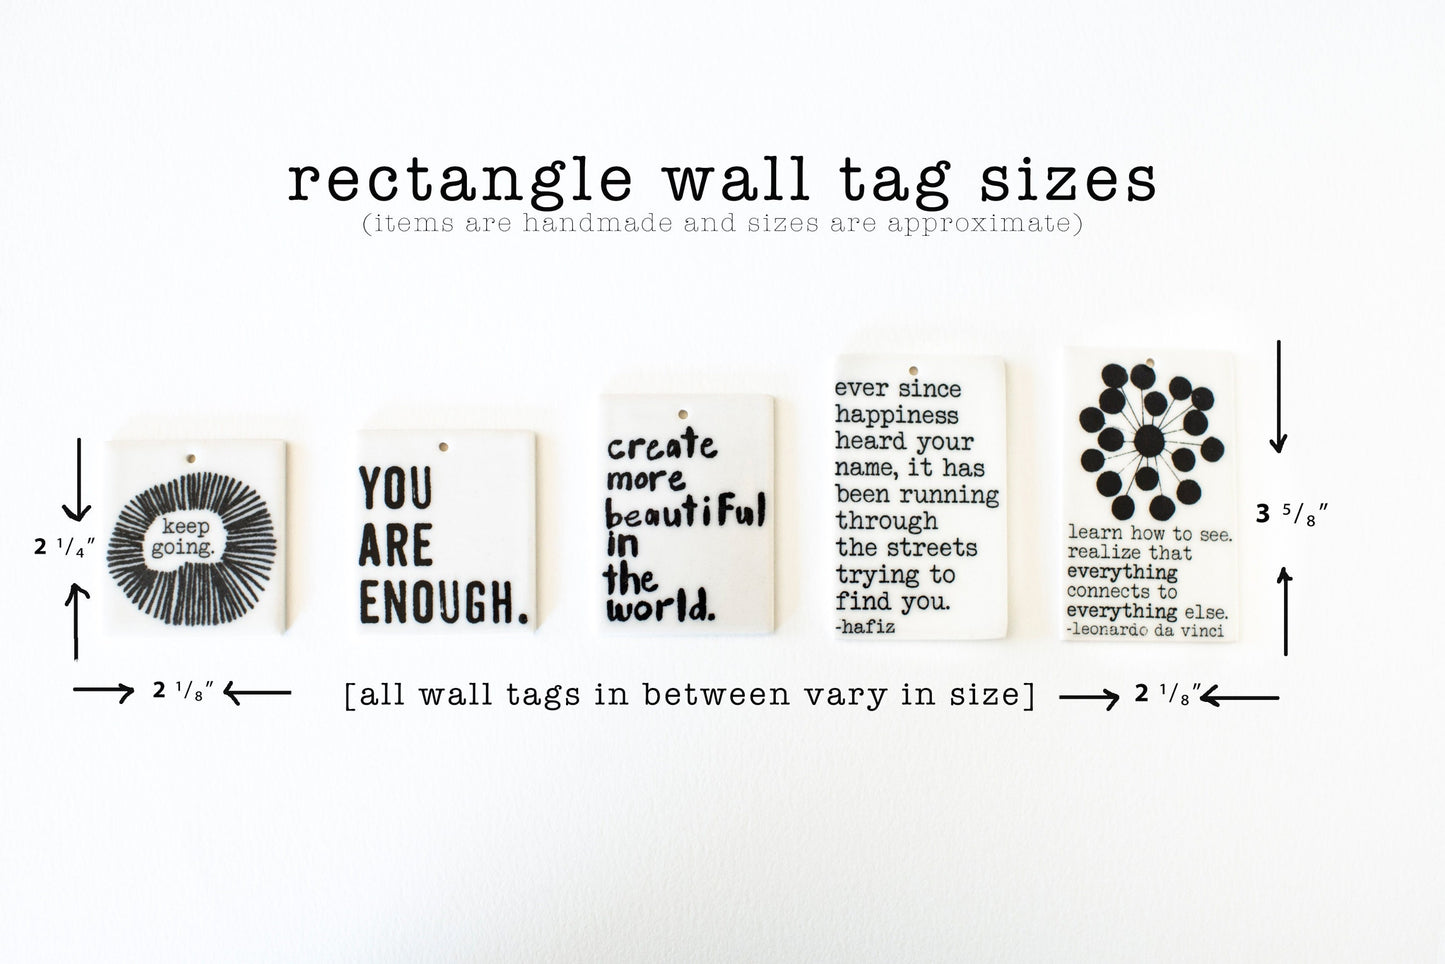 john muir quote ceramic wall tag